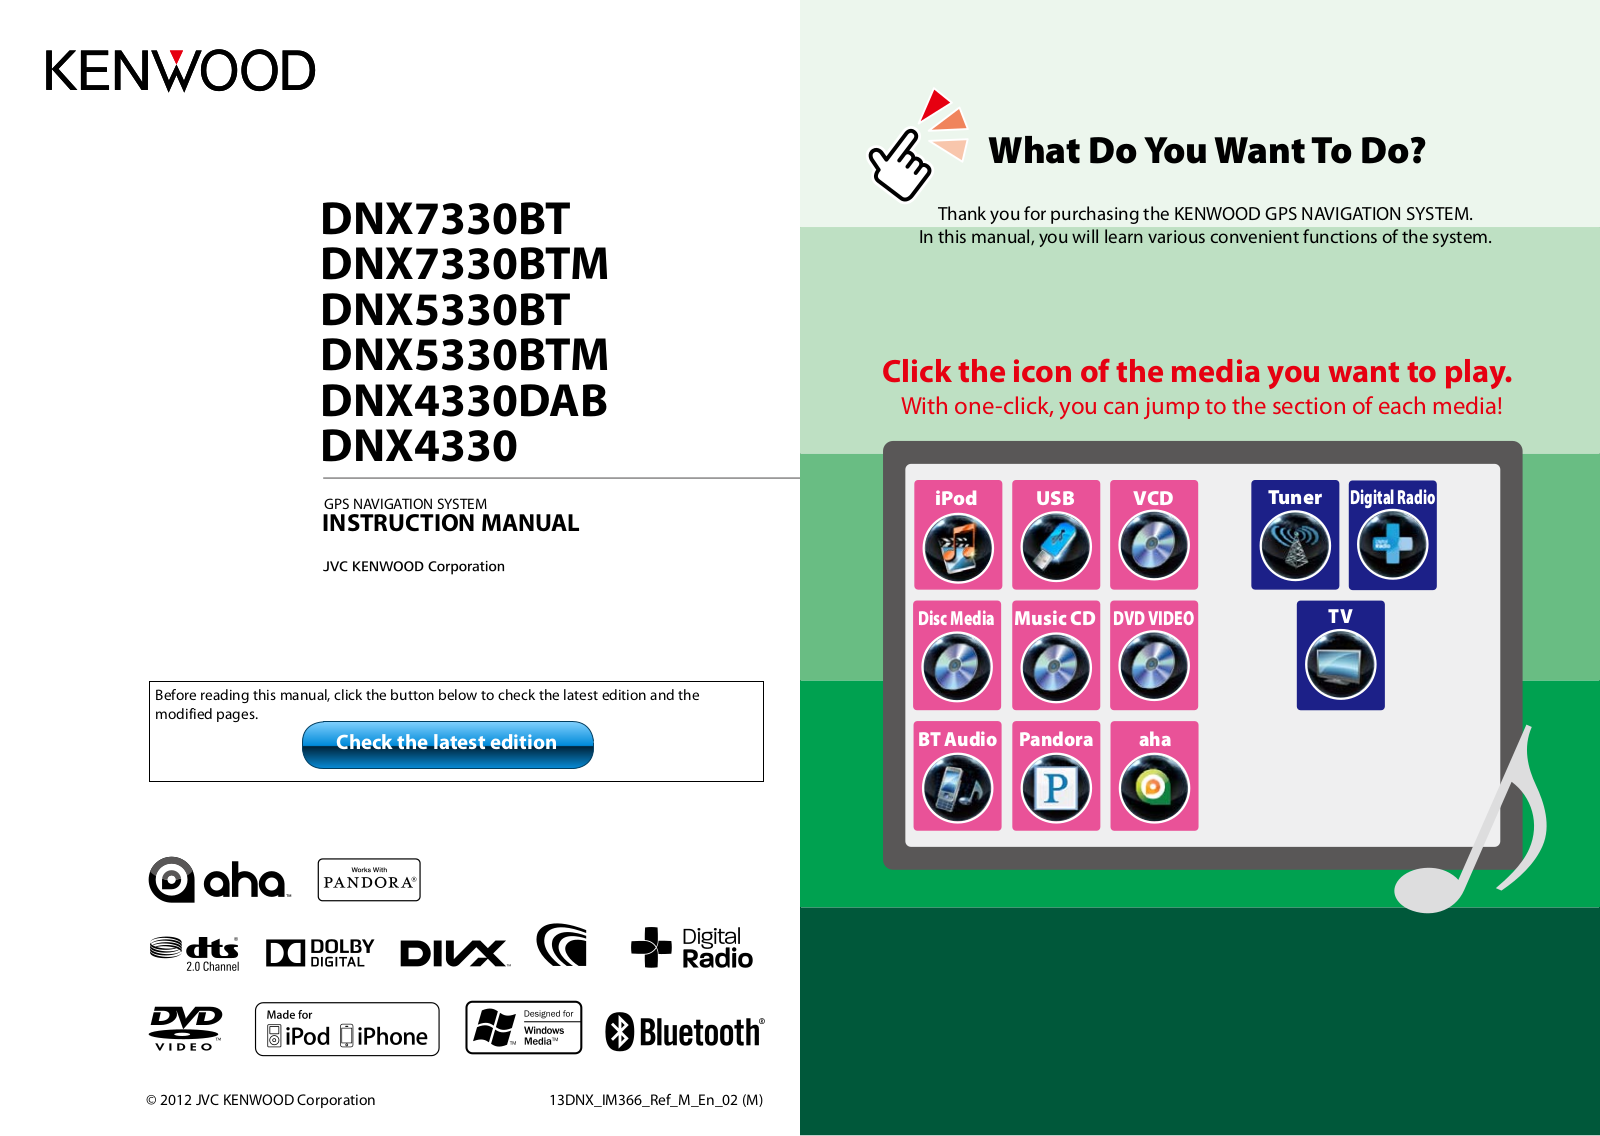 Kenwood dnx7330bt User Manual